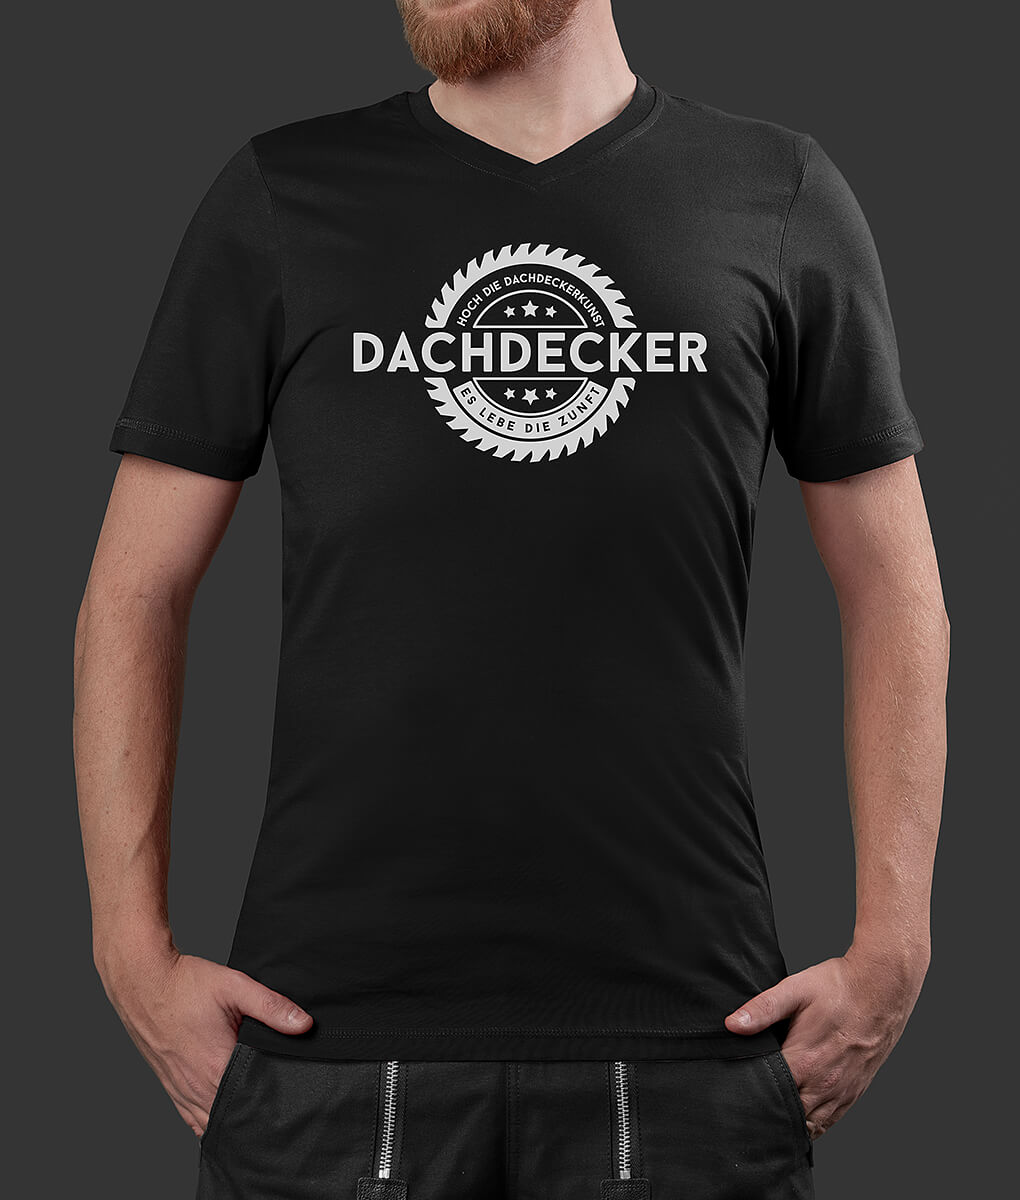 T-Shirt Philipp Säge Dachdecker